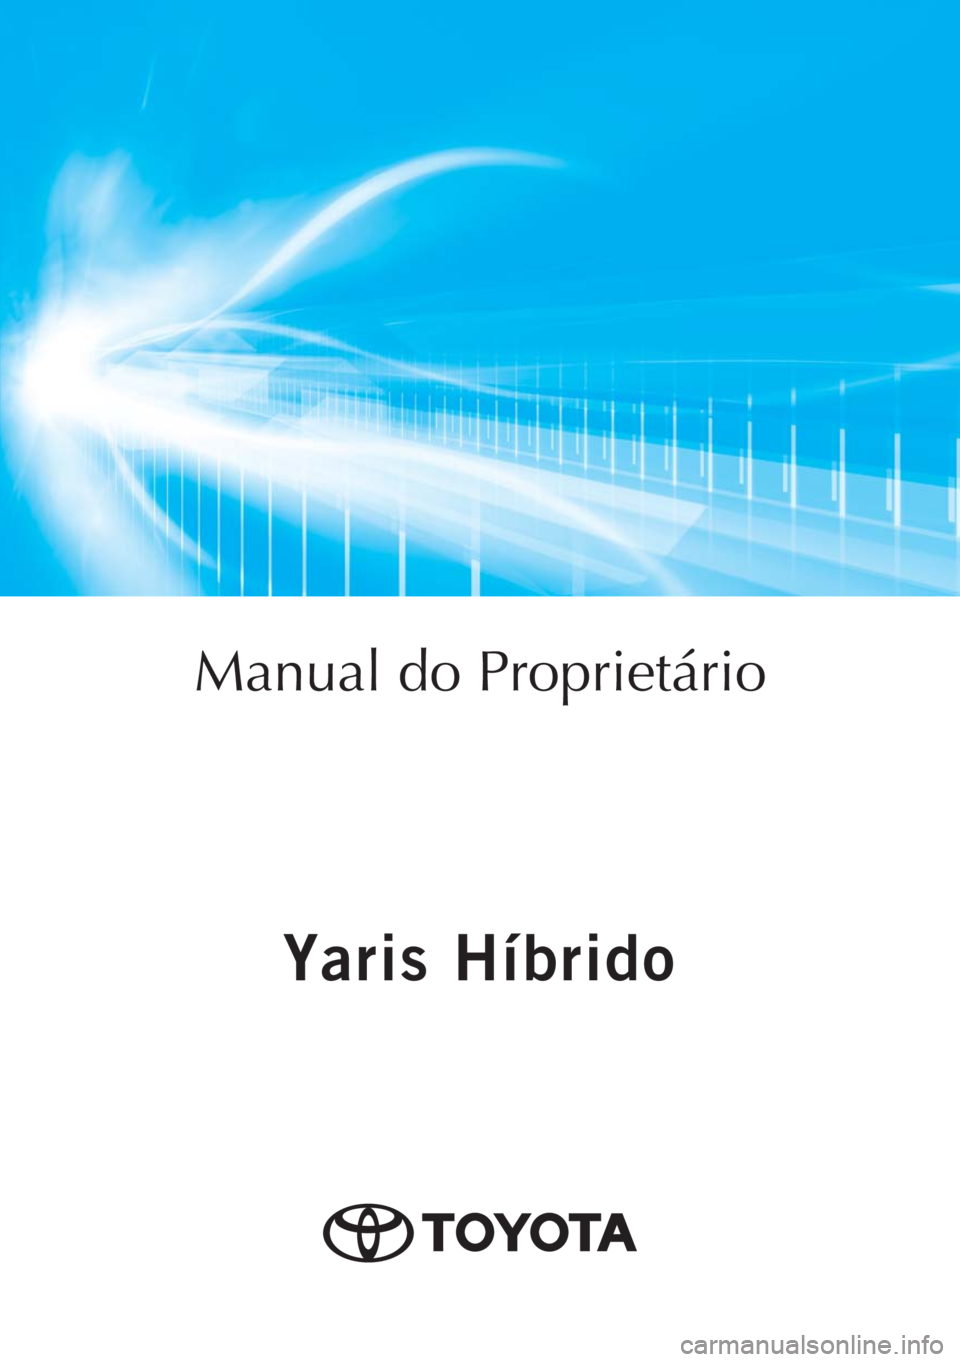 TOYOTA YARIS 2018  Manual de utilização (in Portuguese) Yaris Híbrido
Yaris Híbrido
Manual do Proprietário
Mod. OM52J66EPT
Public. N.º OM52J66E
ORGAL-PORTOToyota Caetano Portugal, S.A. 